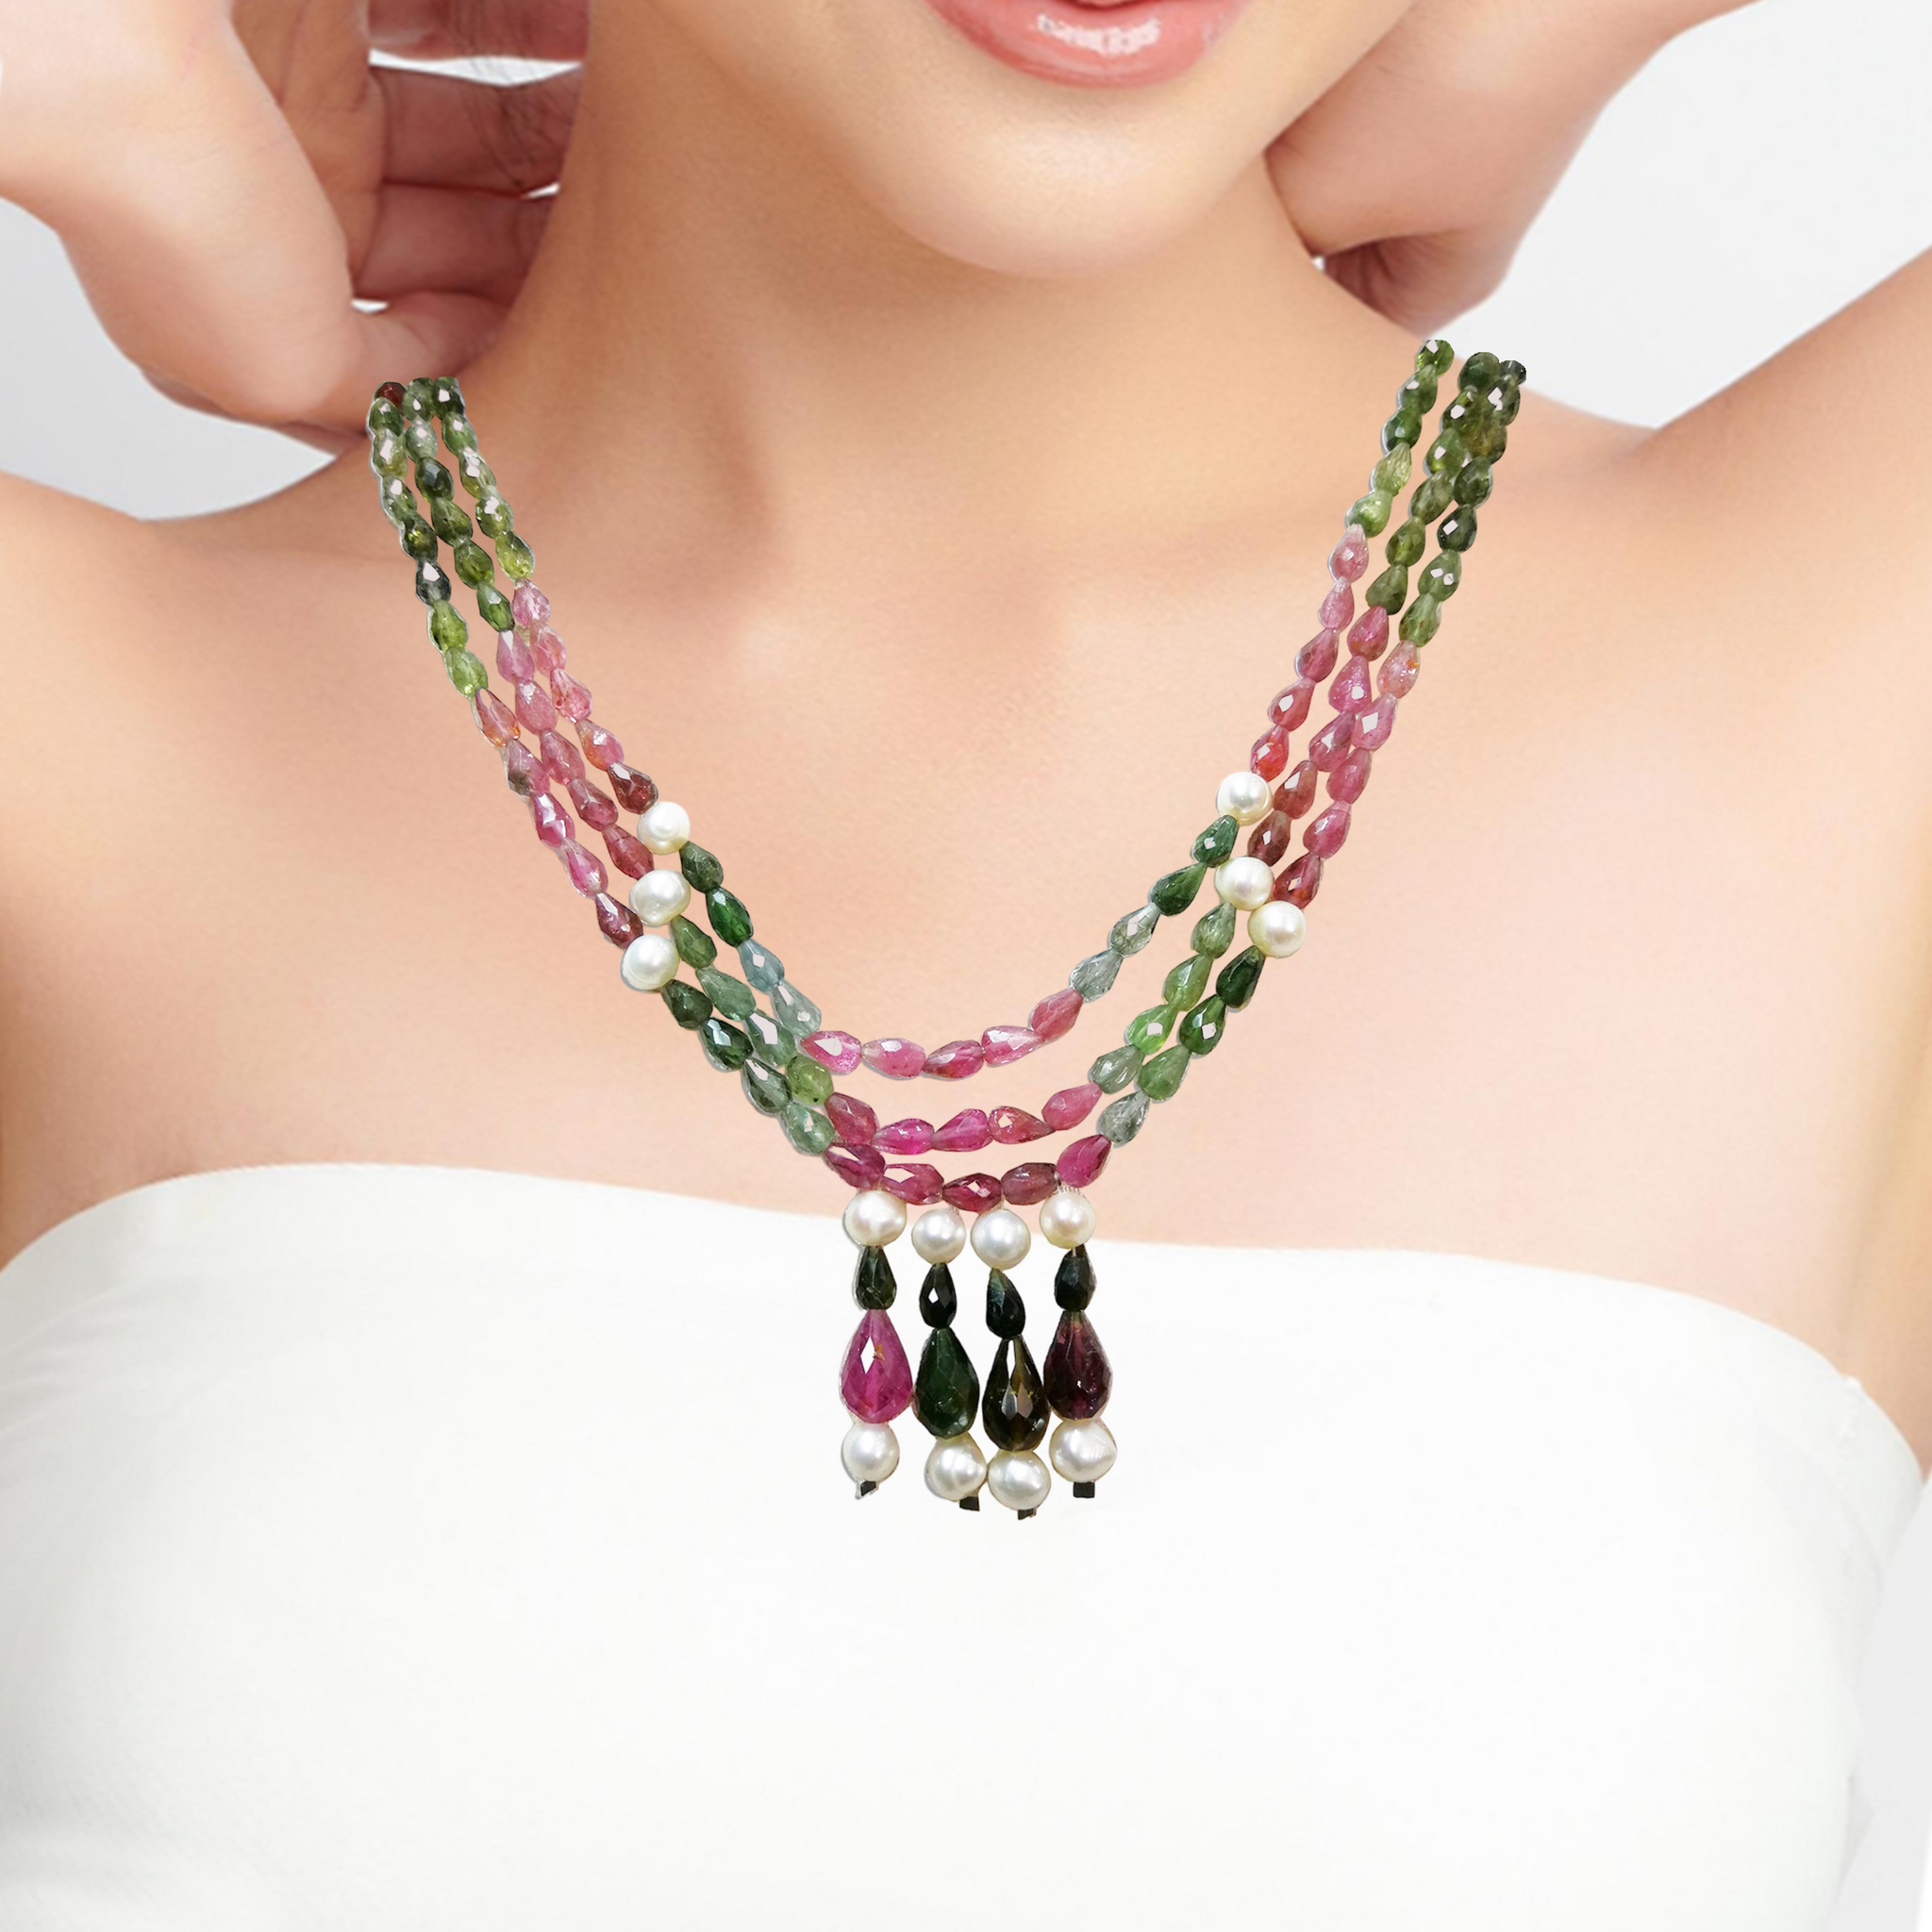 Natural Handmade Necklace 16"-18" Pearls, Tourmaline Gemstone Beads Jewelry